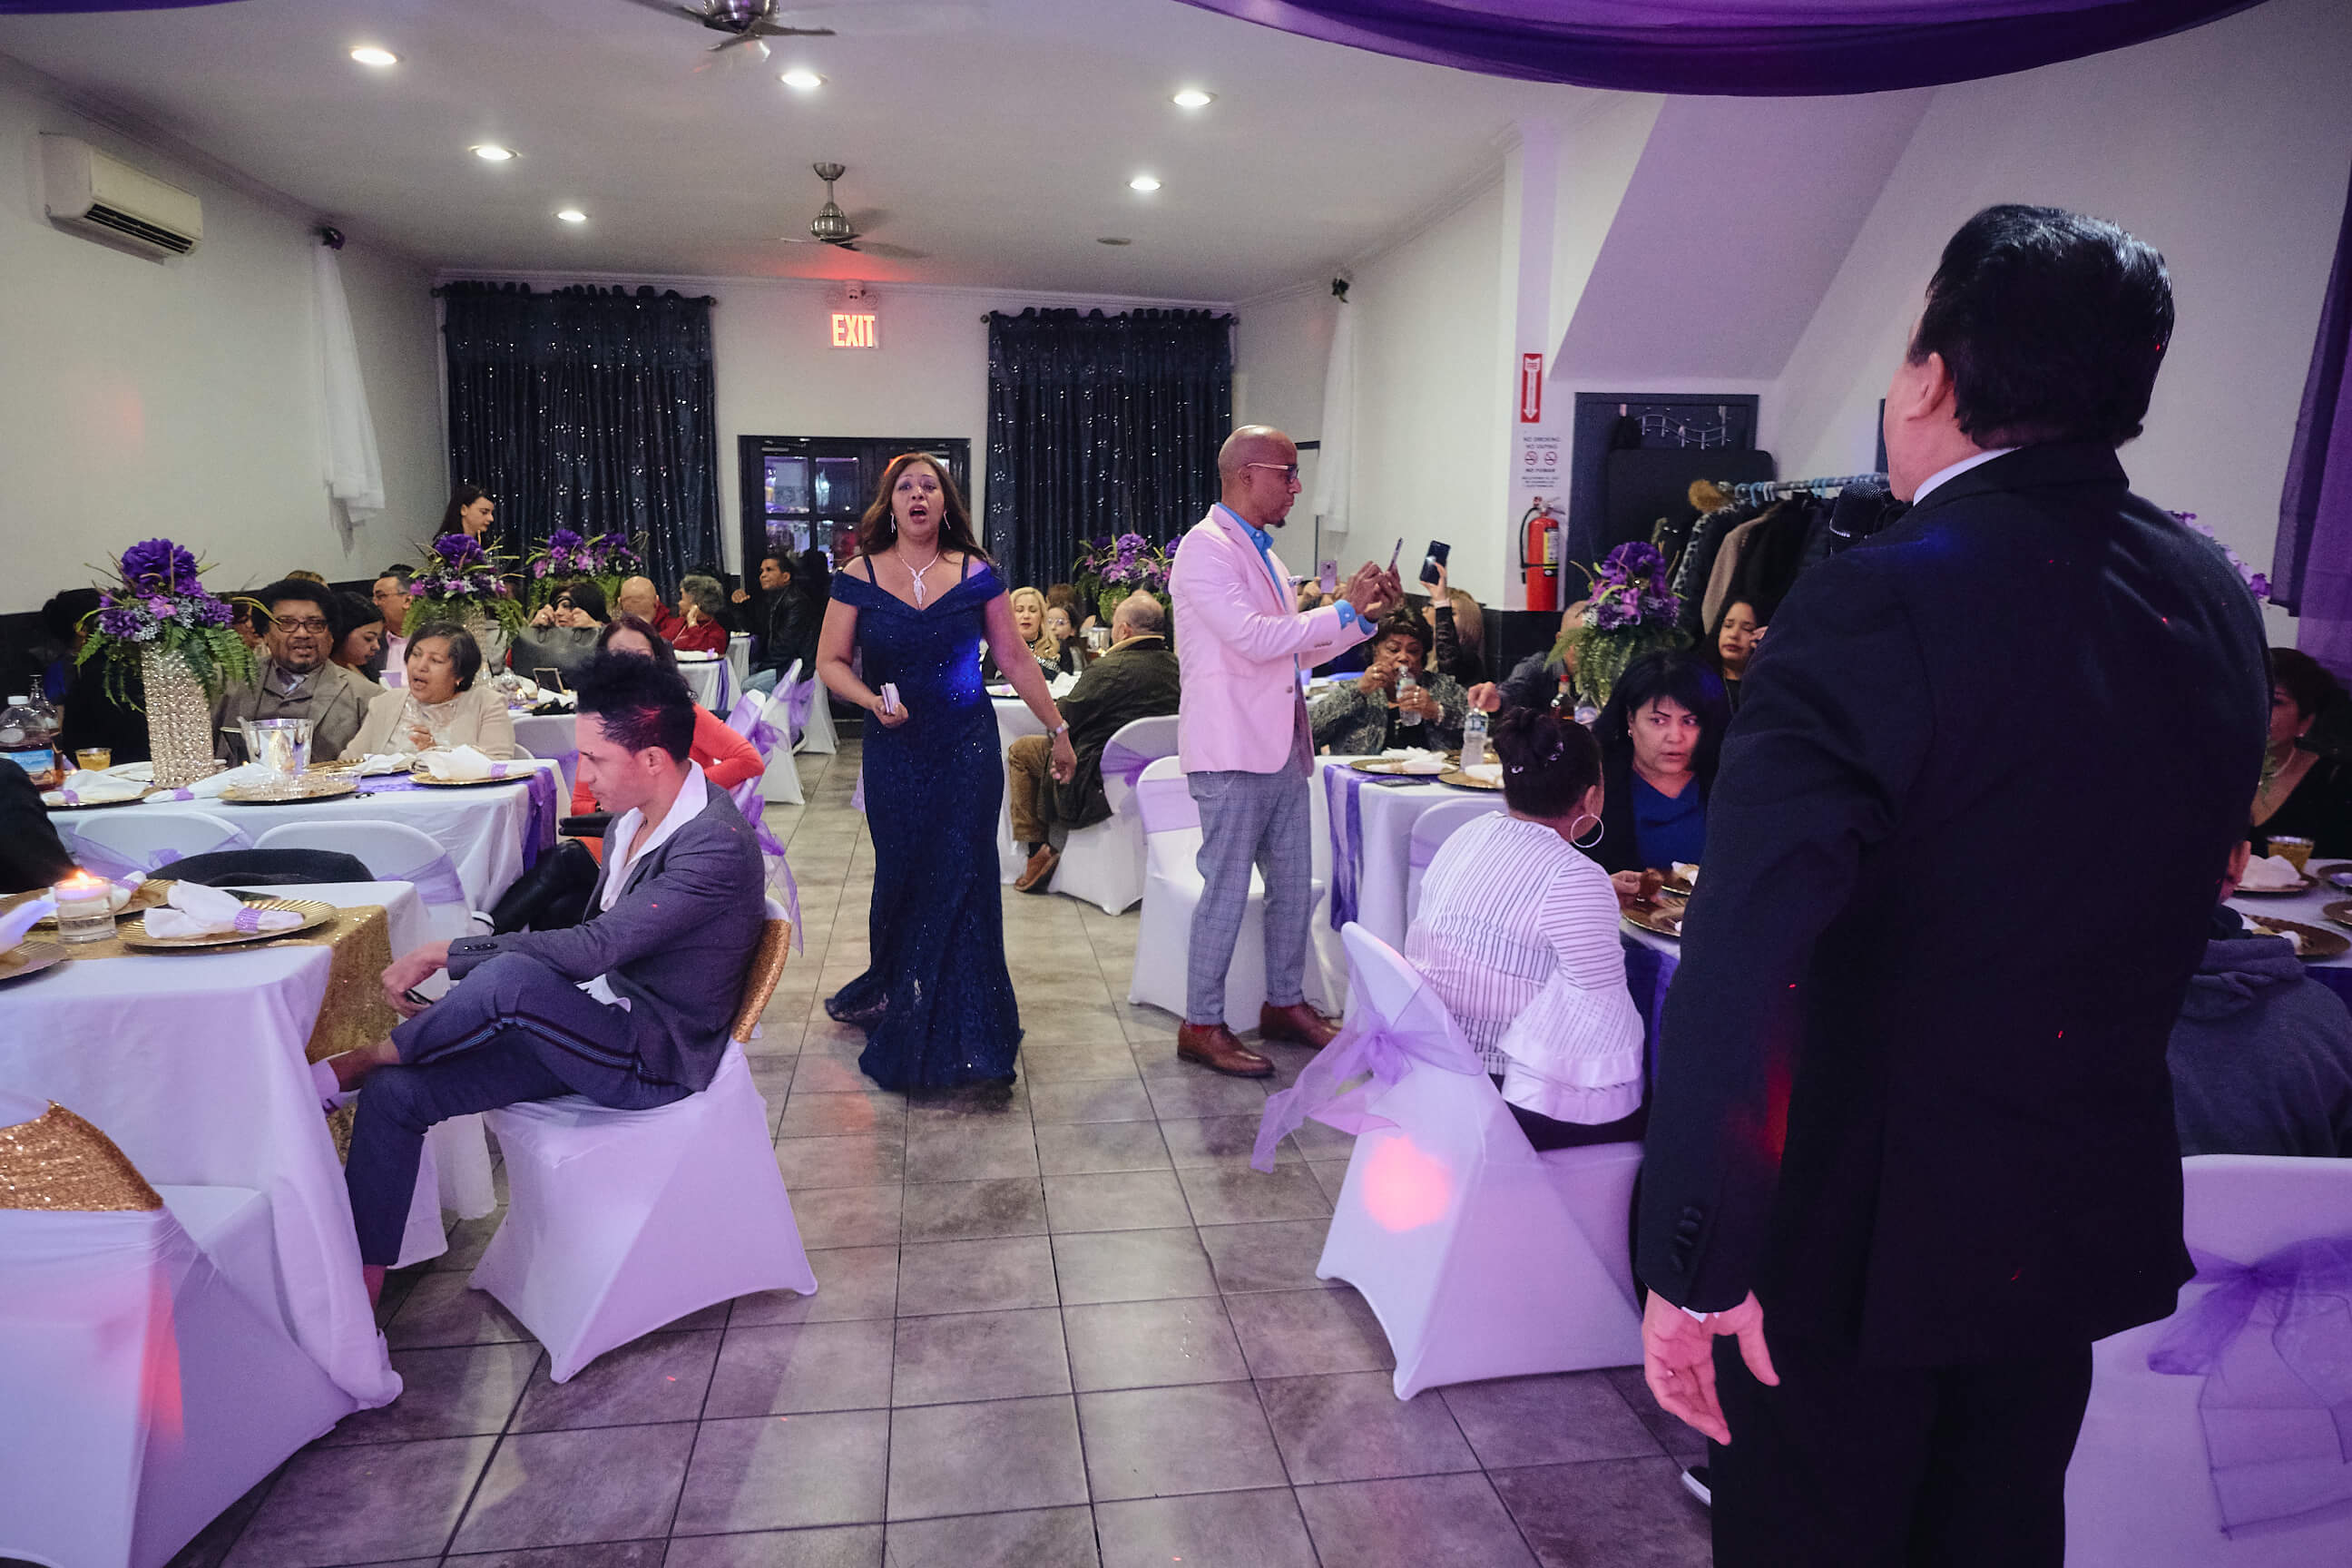 Violeta - 70th Birthday - The Venue Party Hall - Event Photography - Ridgewood, Queens New York